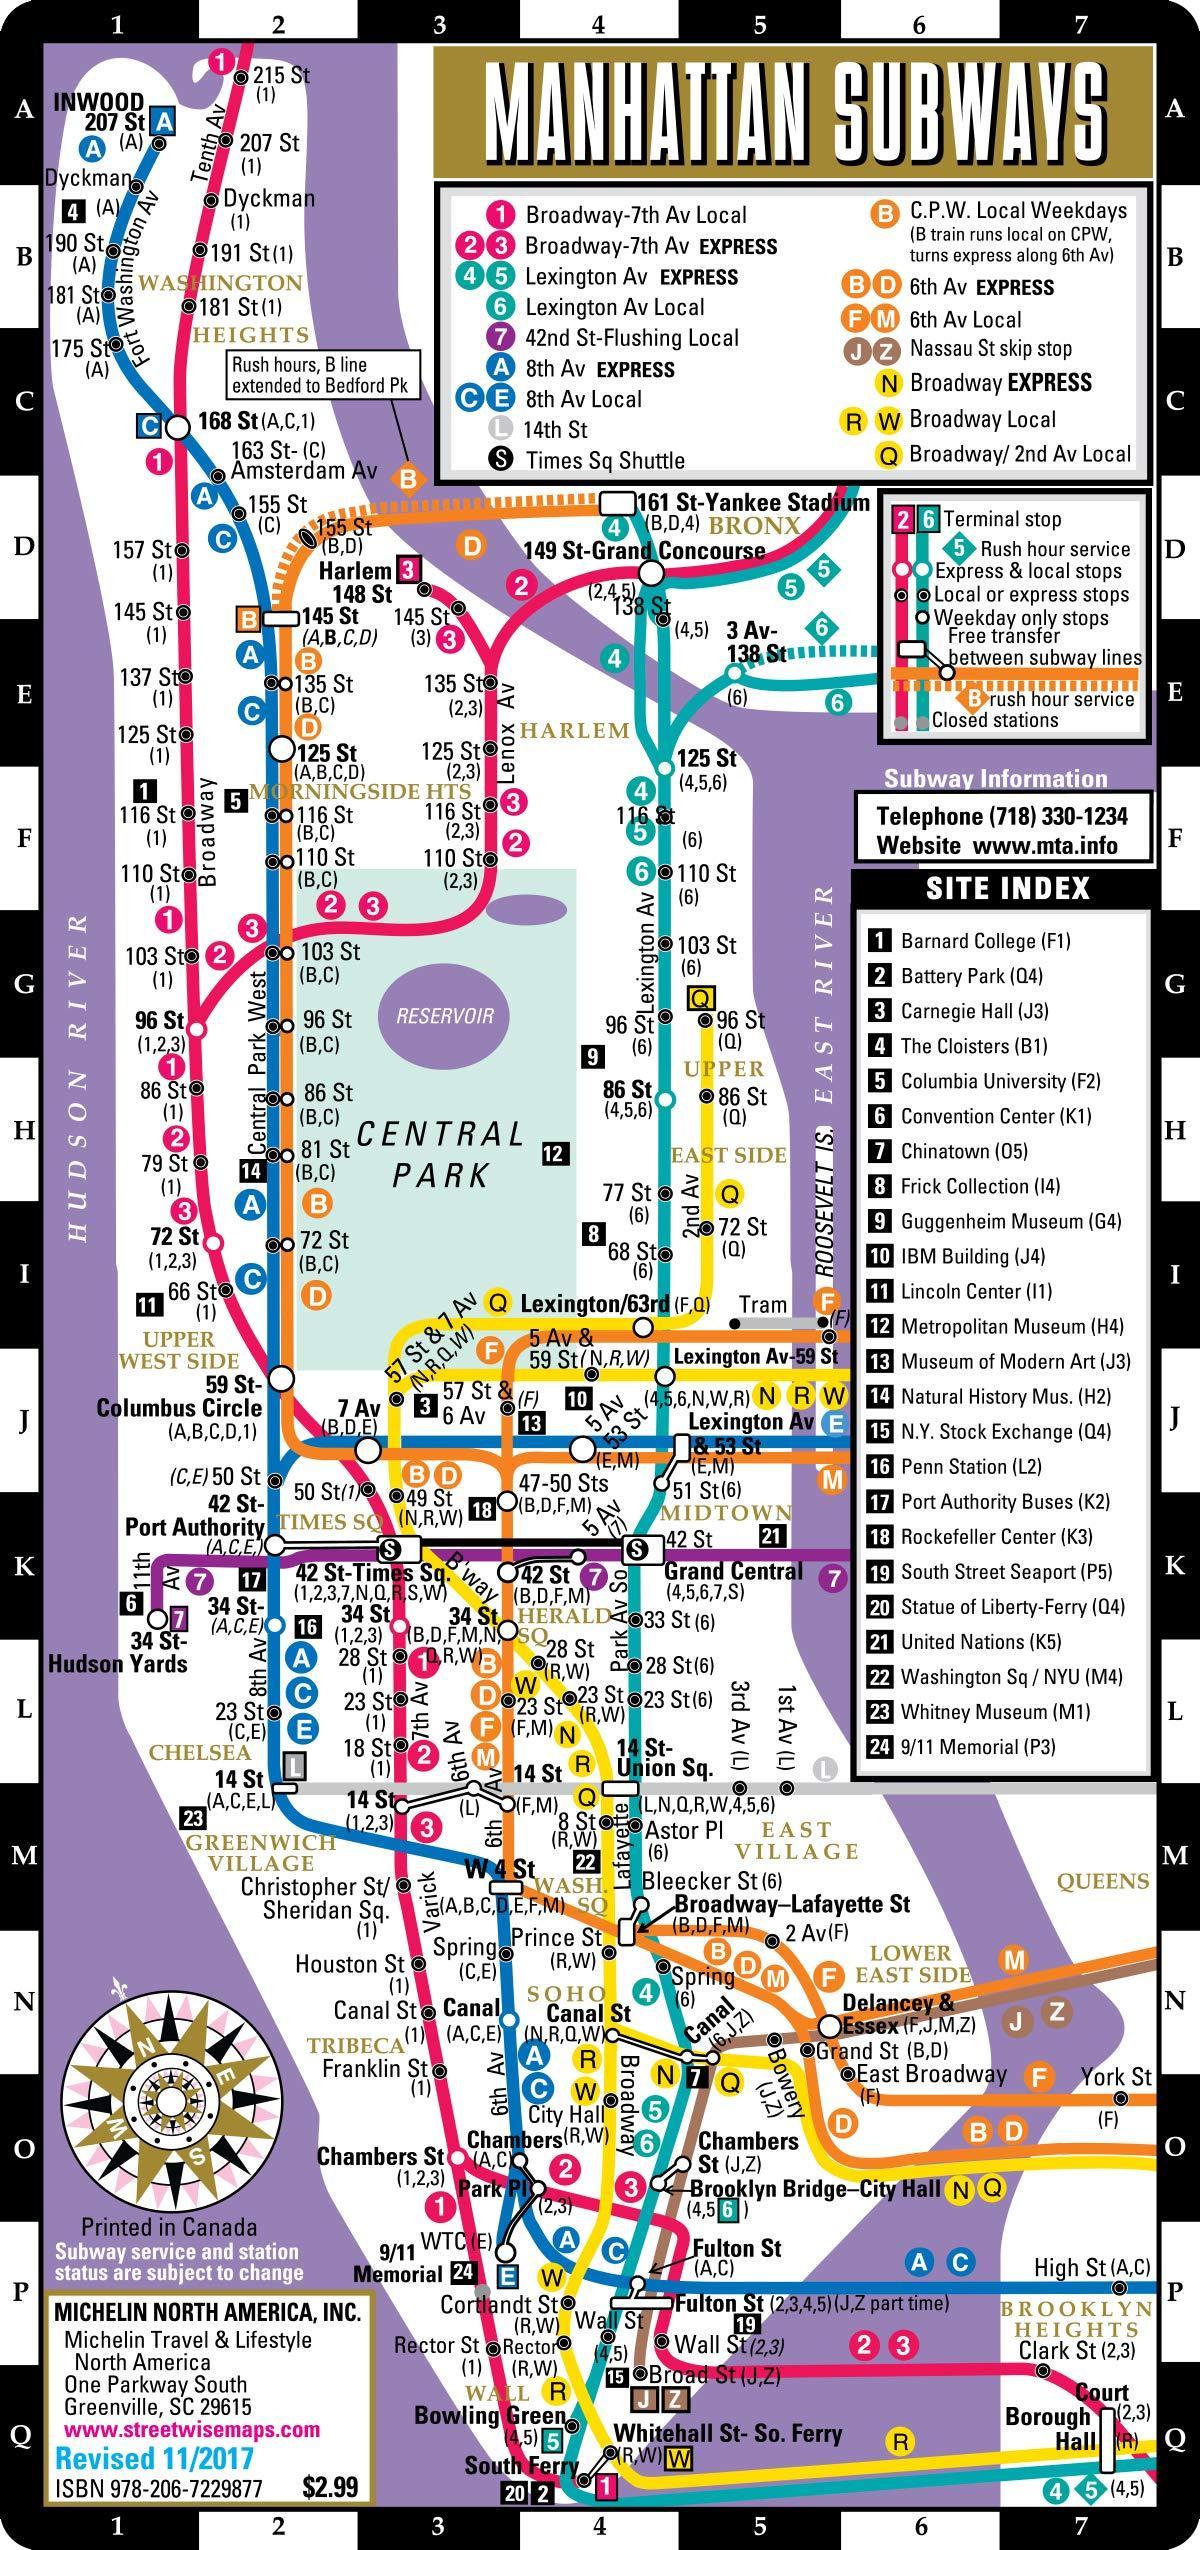 Manhattan subway station map